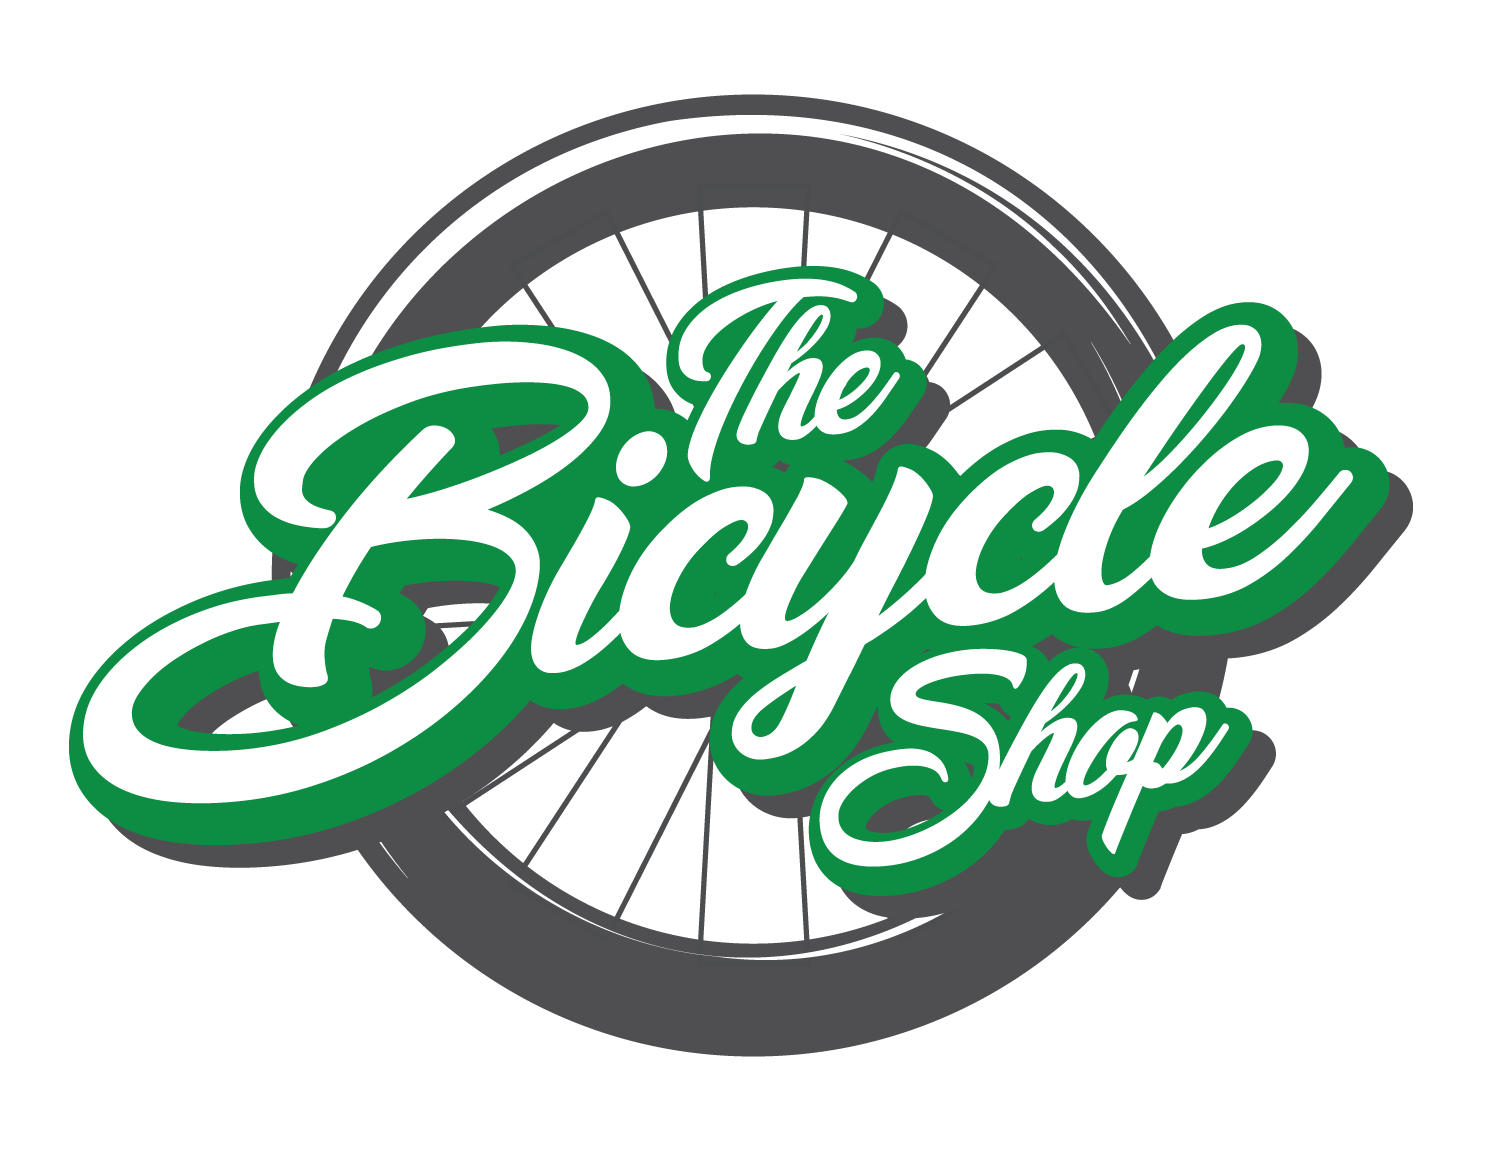 velodrome bike shop